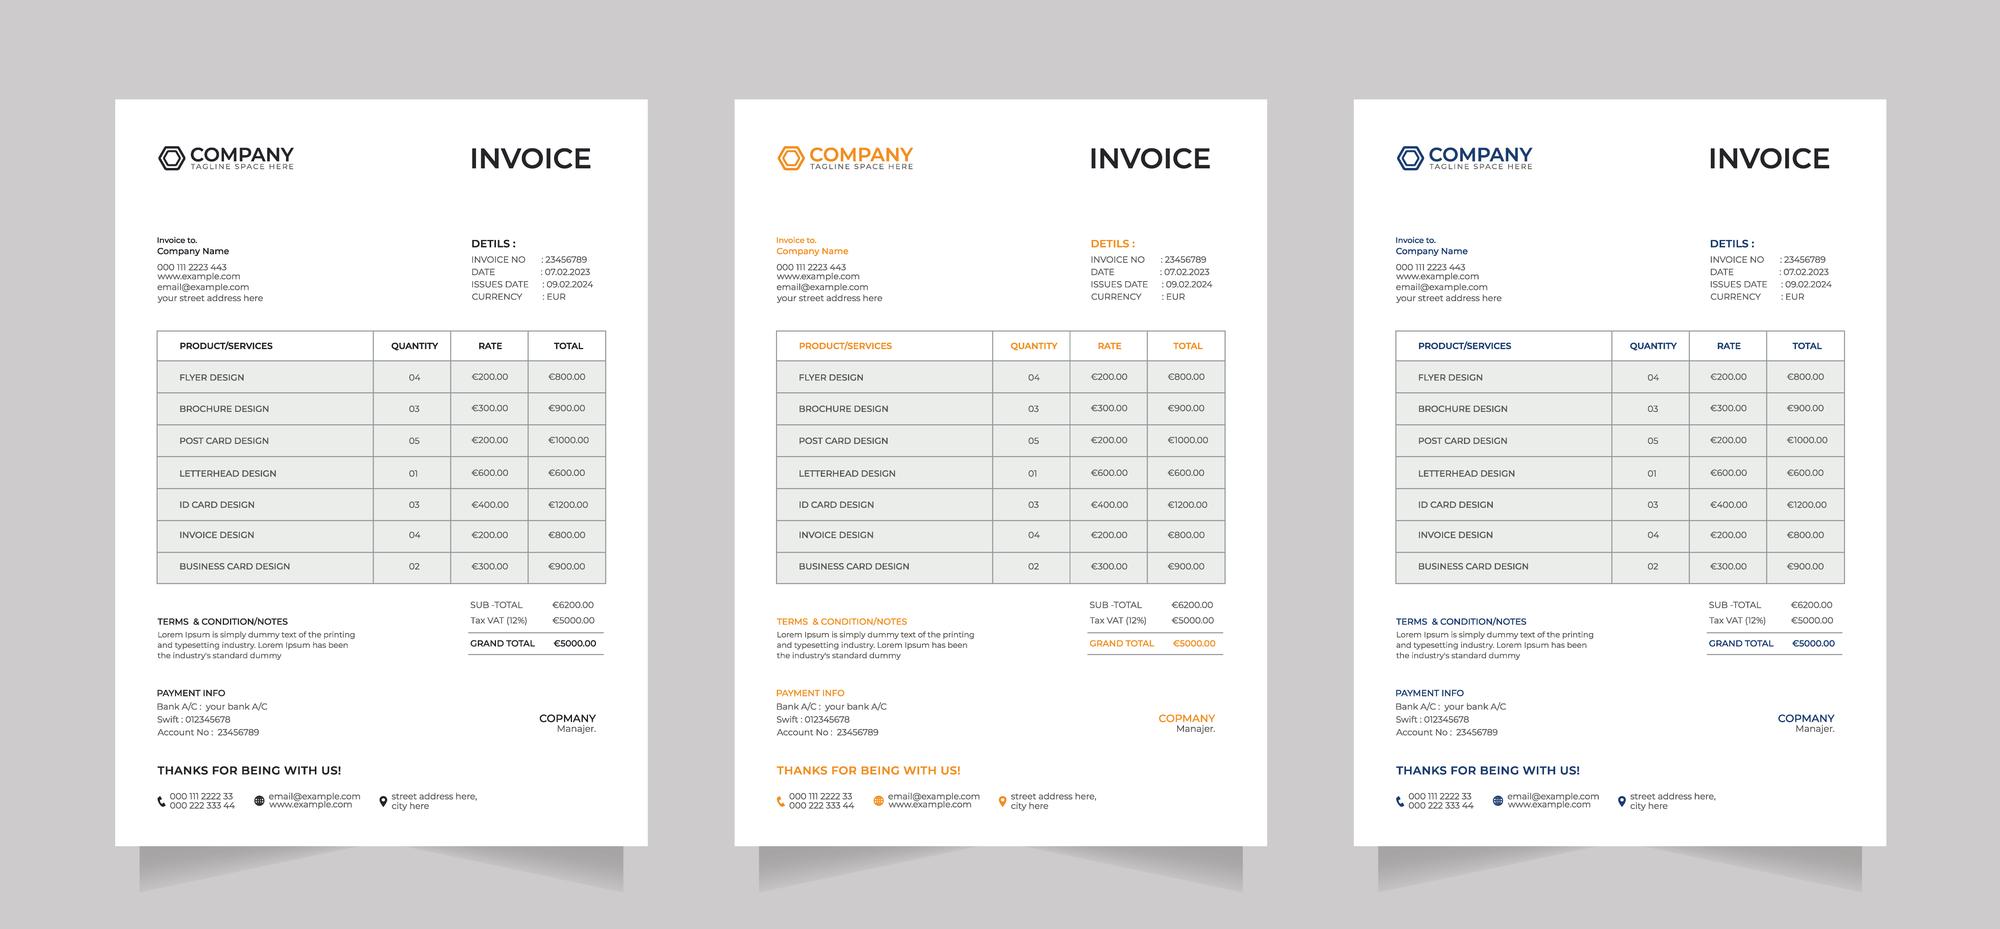 Blue orange and black colors professional minimal business invoice design Print templates